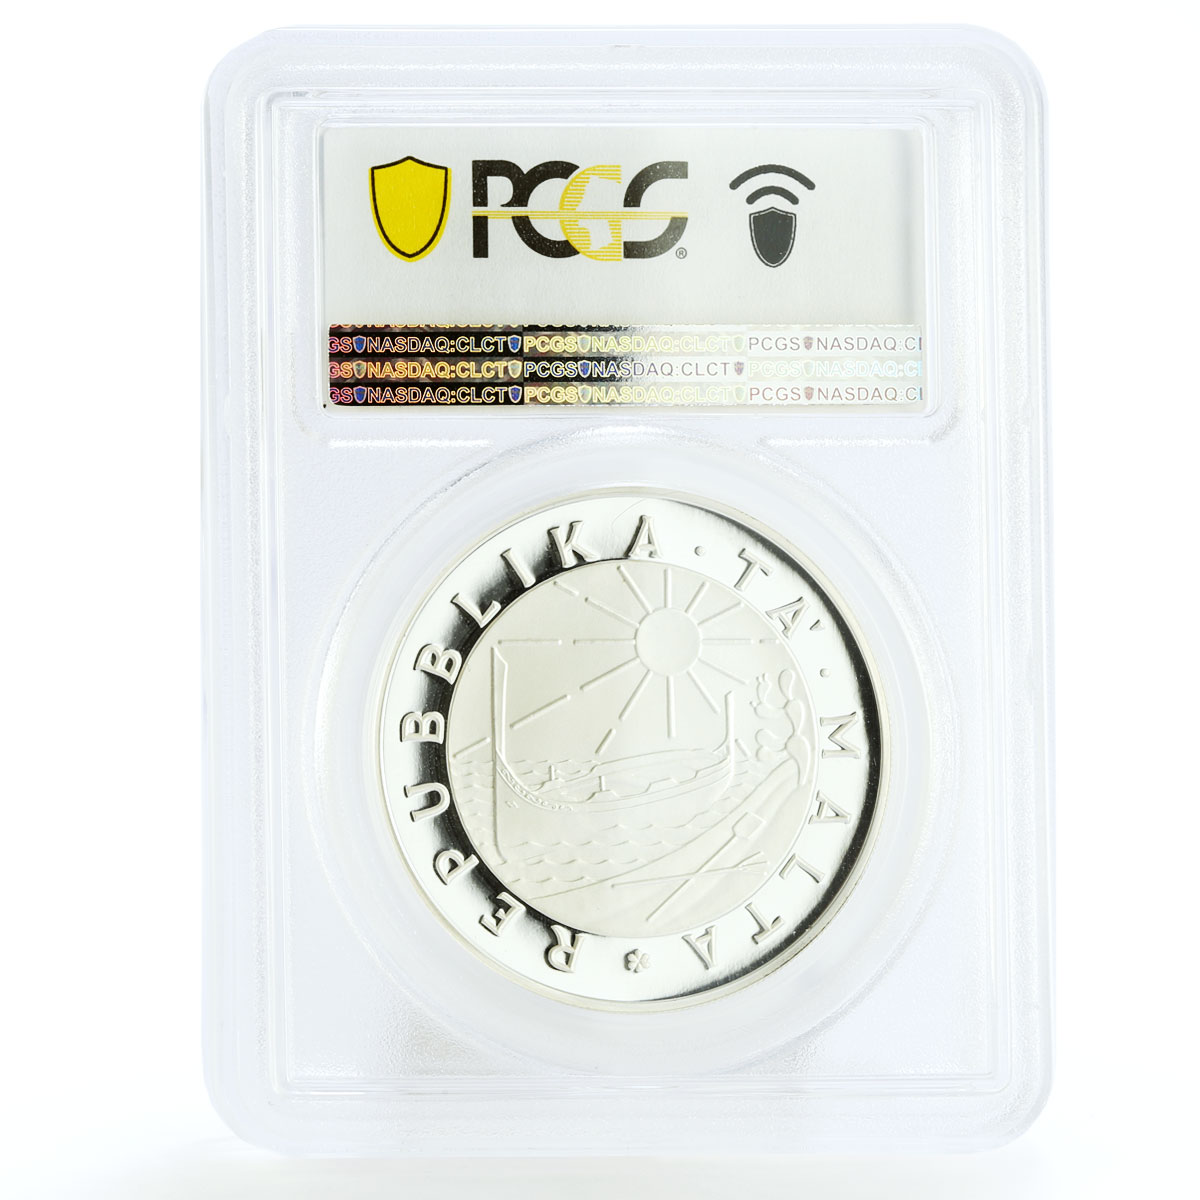 Malta 5 pounds World Year of the Child PR66 PCGS silver piedfort coin 1981